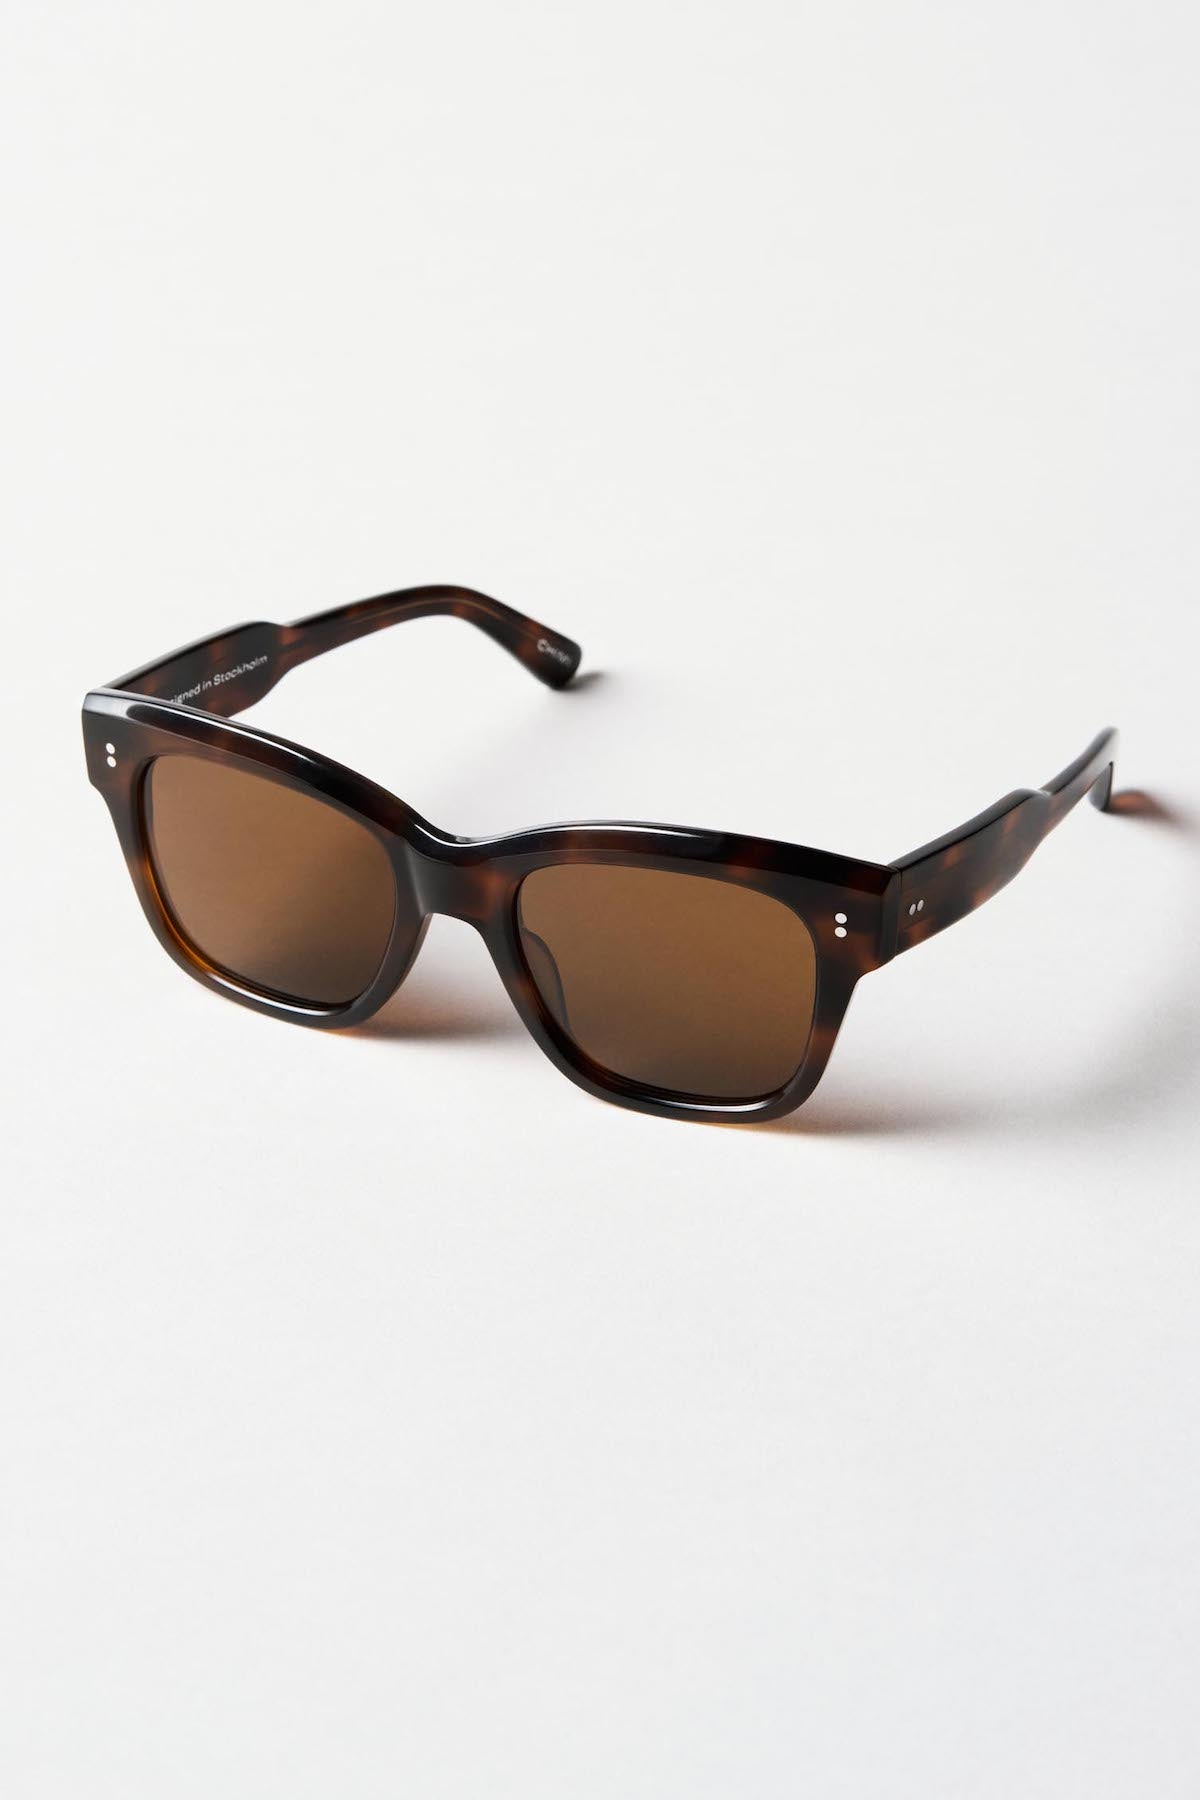   7.2 Chimi Sunglasses Tortoise Side 